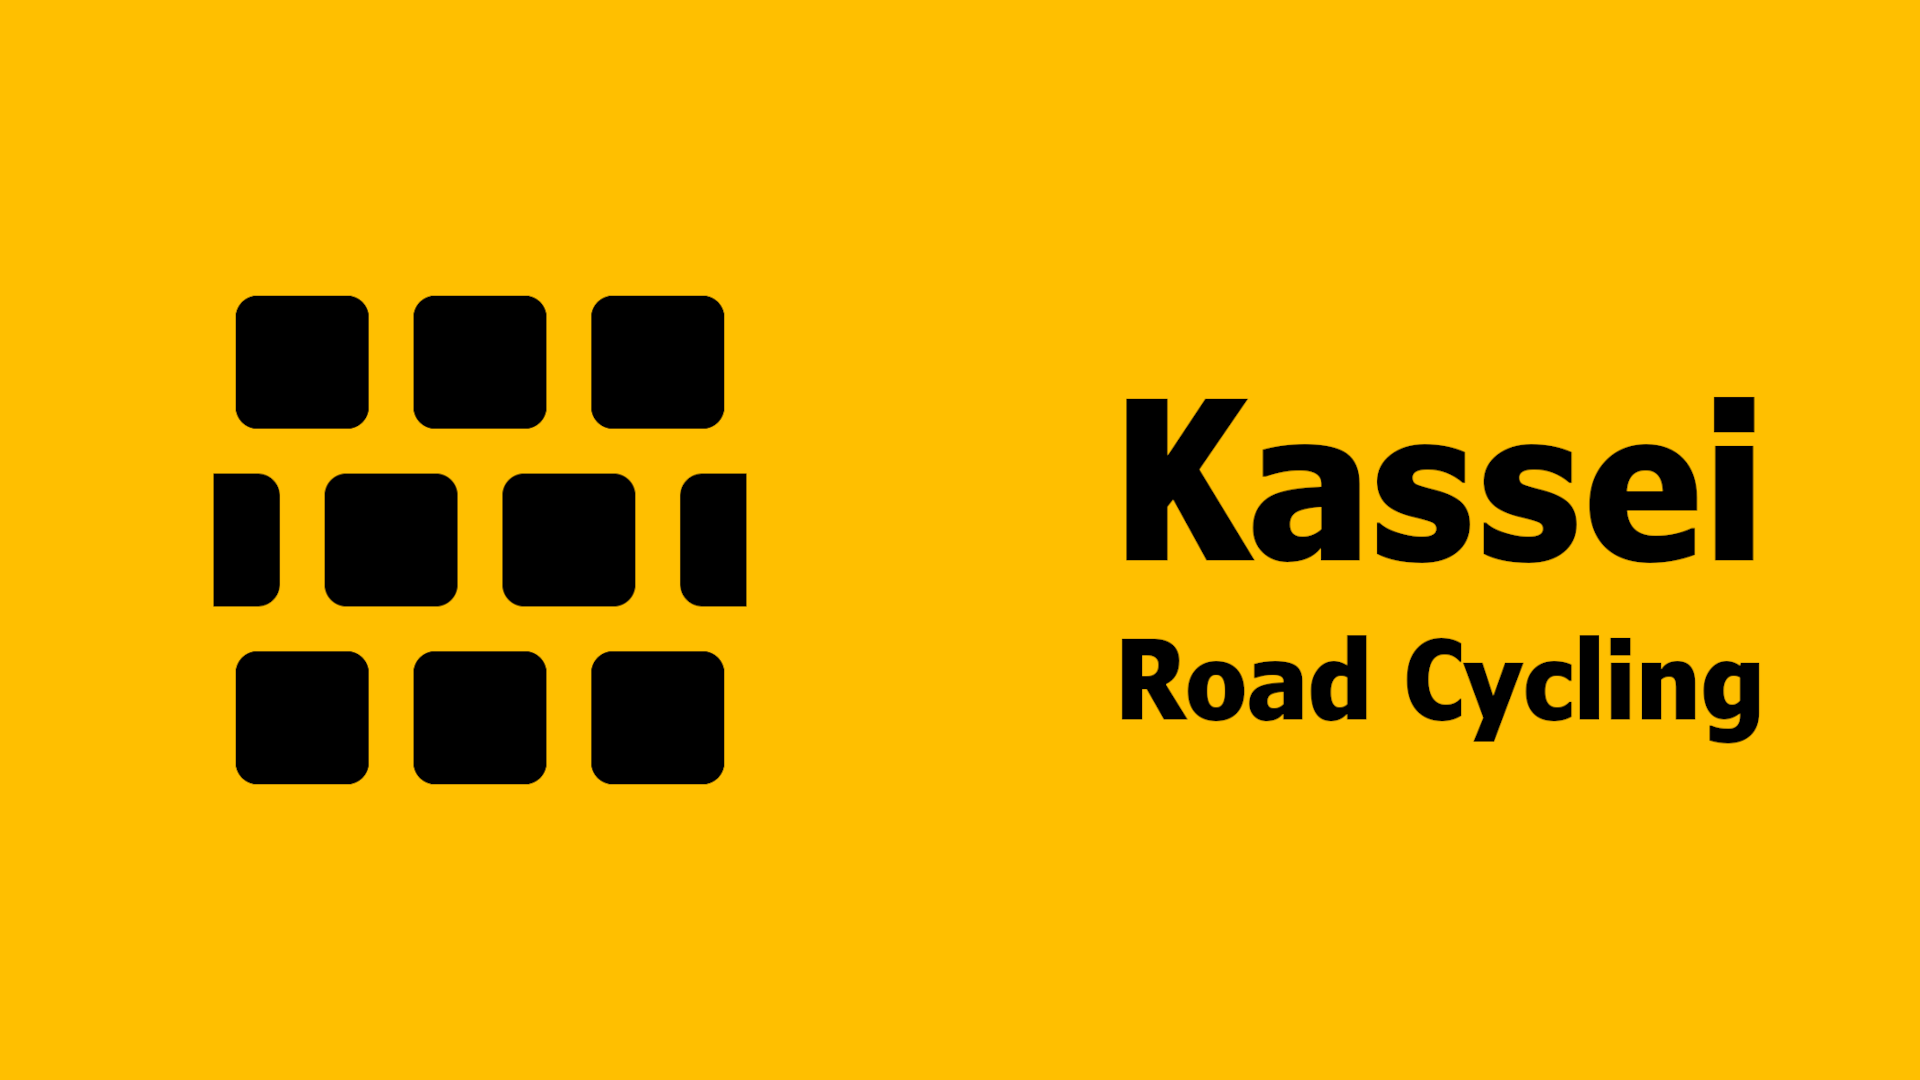 Kassei - Road Cycling